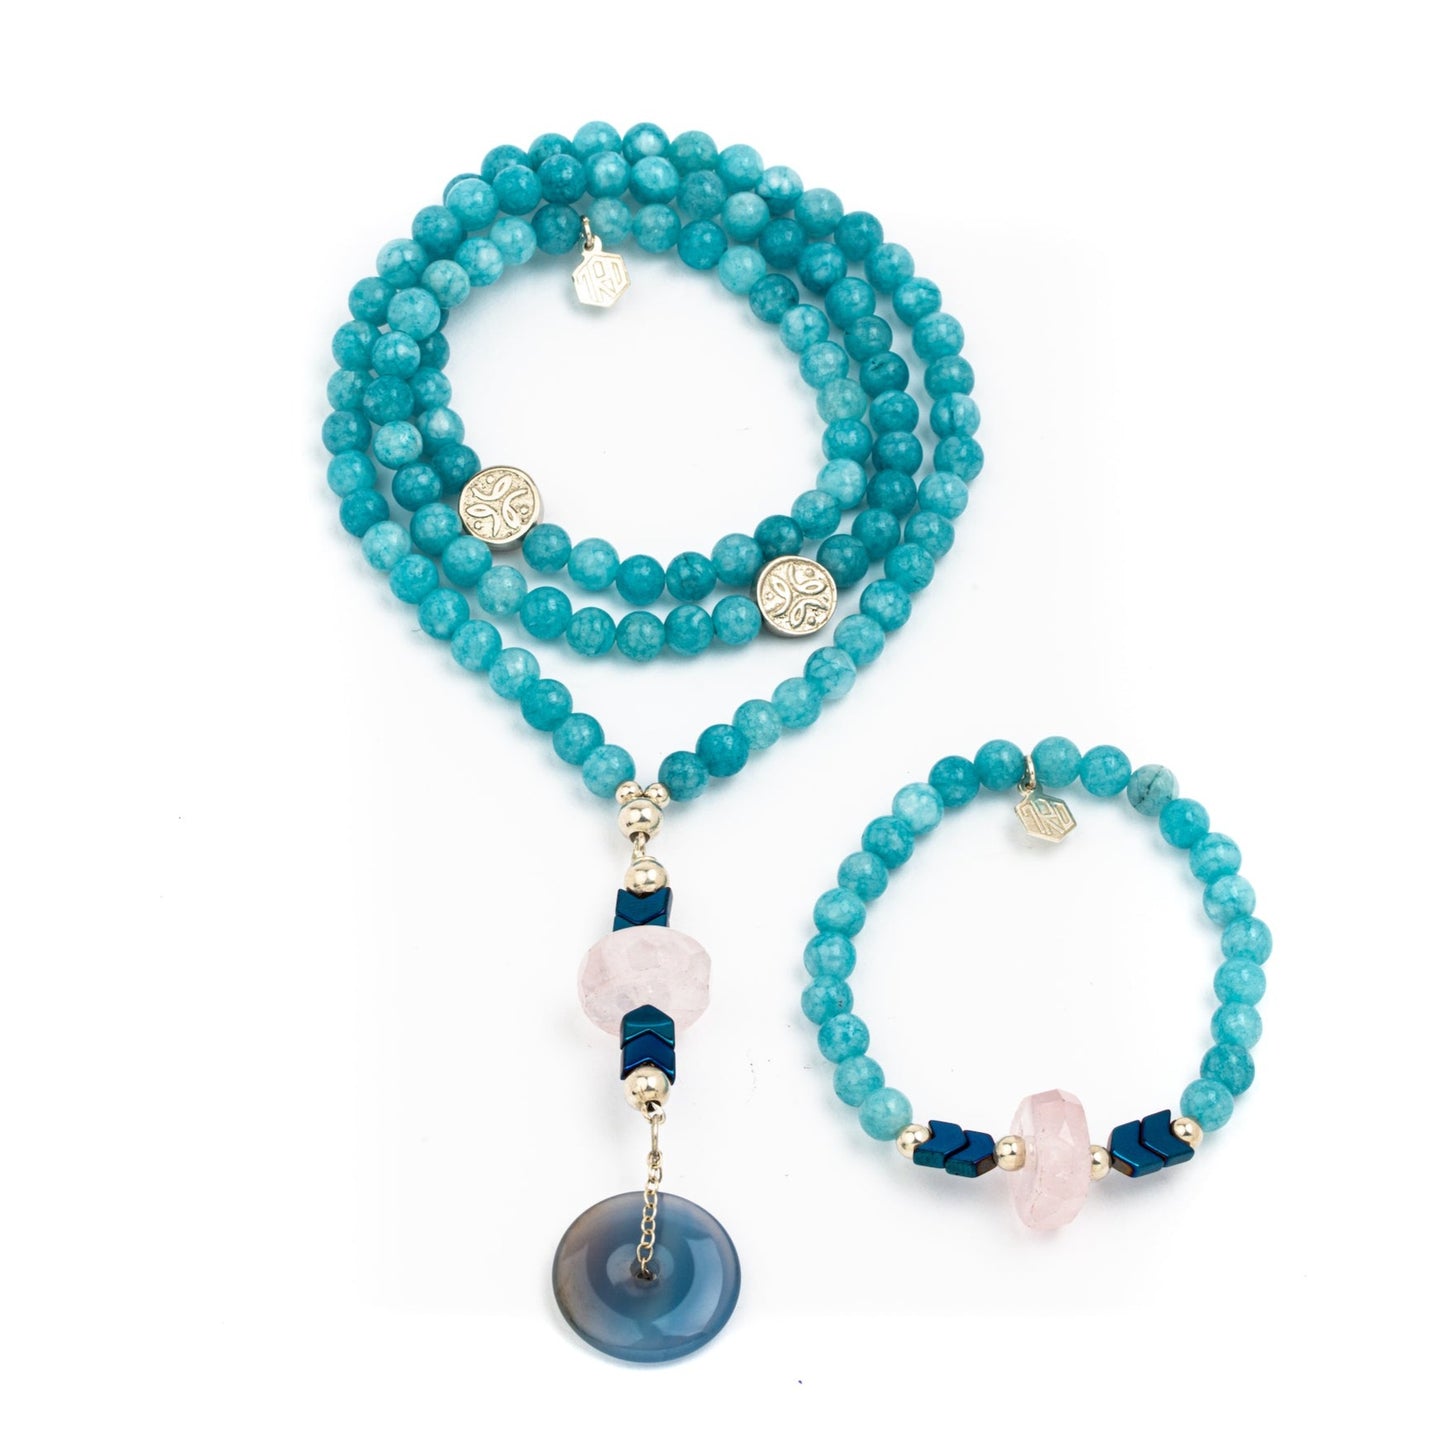 Blue agate necklace and bracelet set